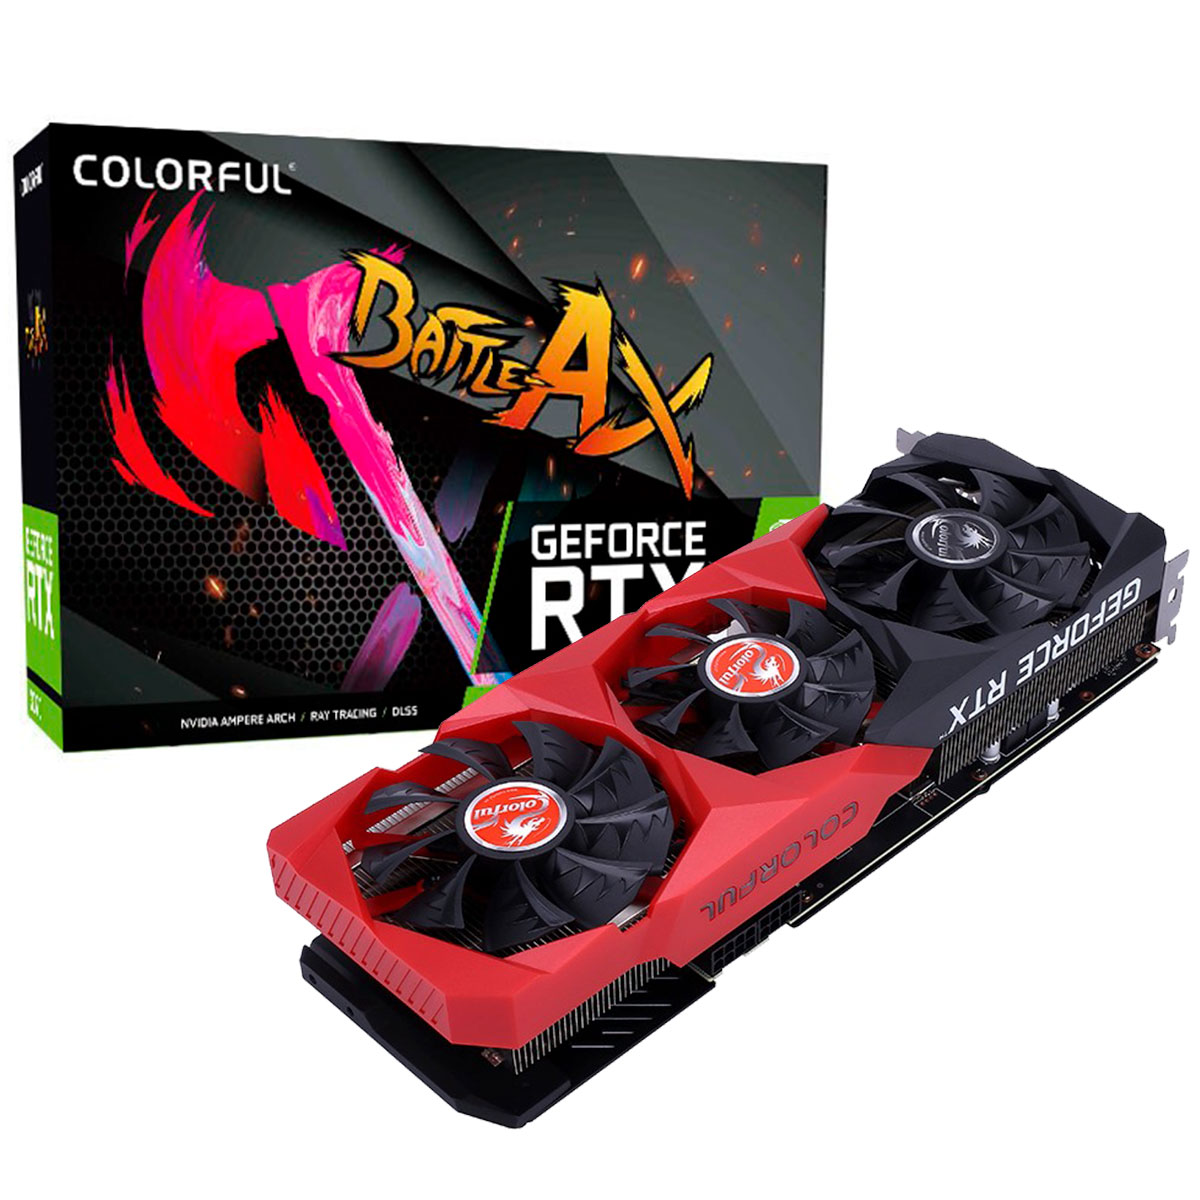 GeForce RTX 3070 8GB GDDR6 256bits - Colorful Battle Ax G-I3070 NB-V - Selo LHR